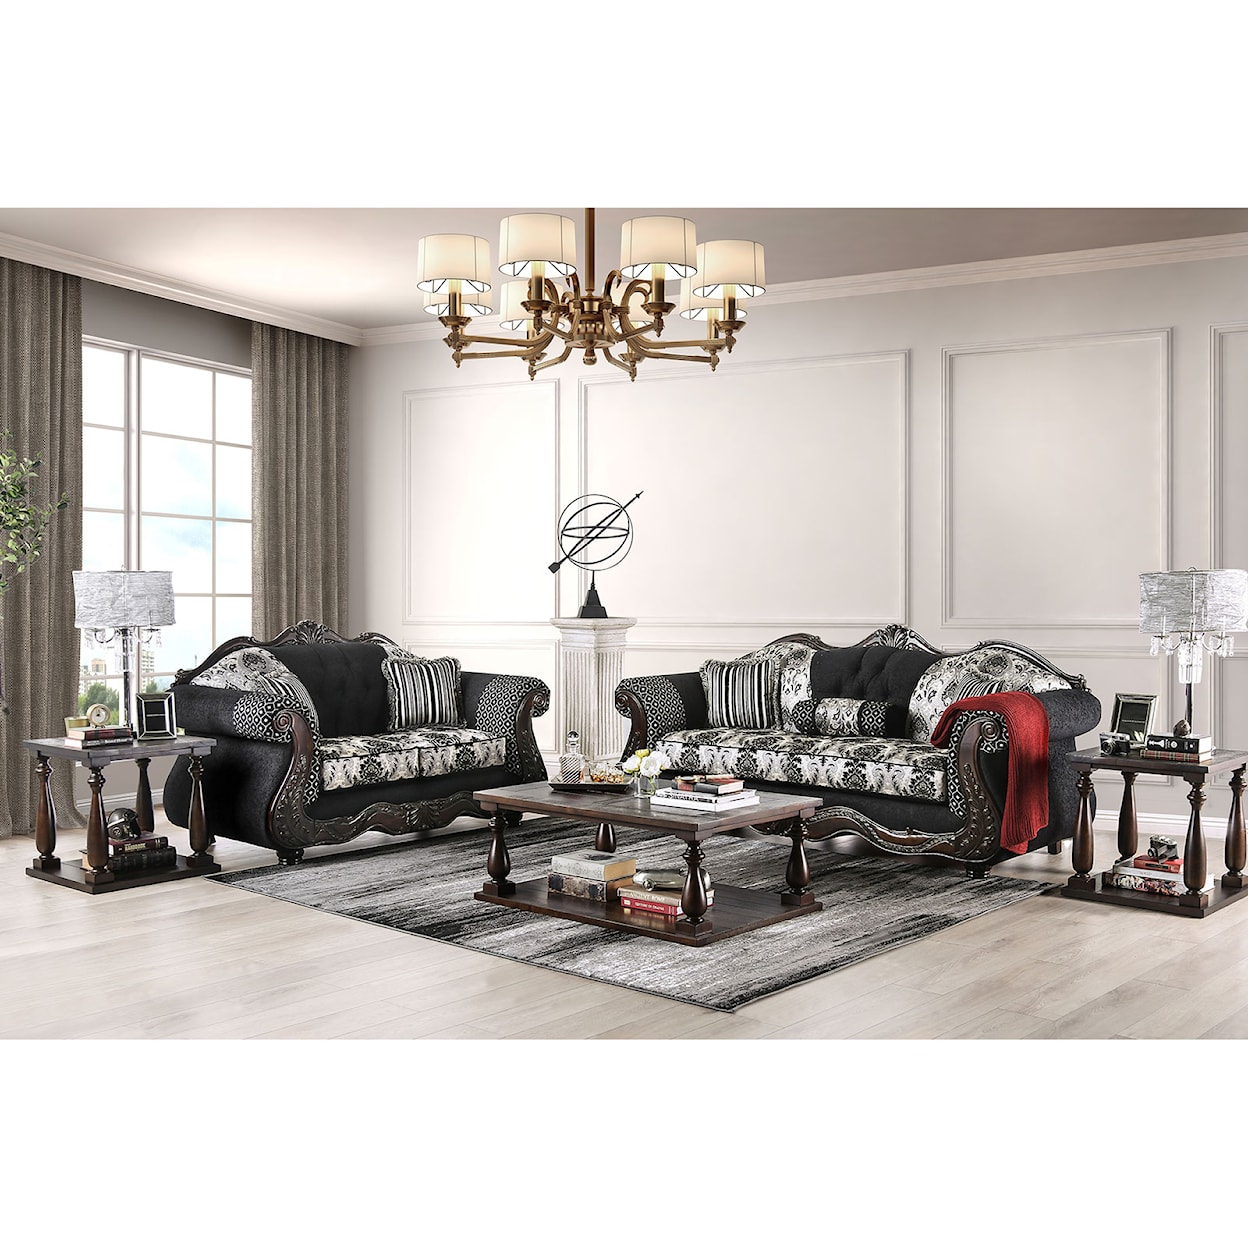 Furniture of America Ronja Living Room Set